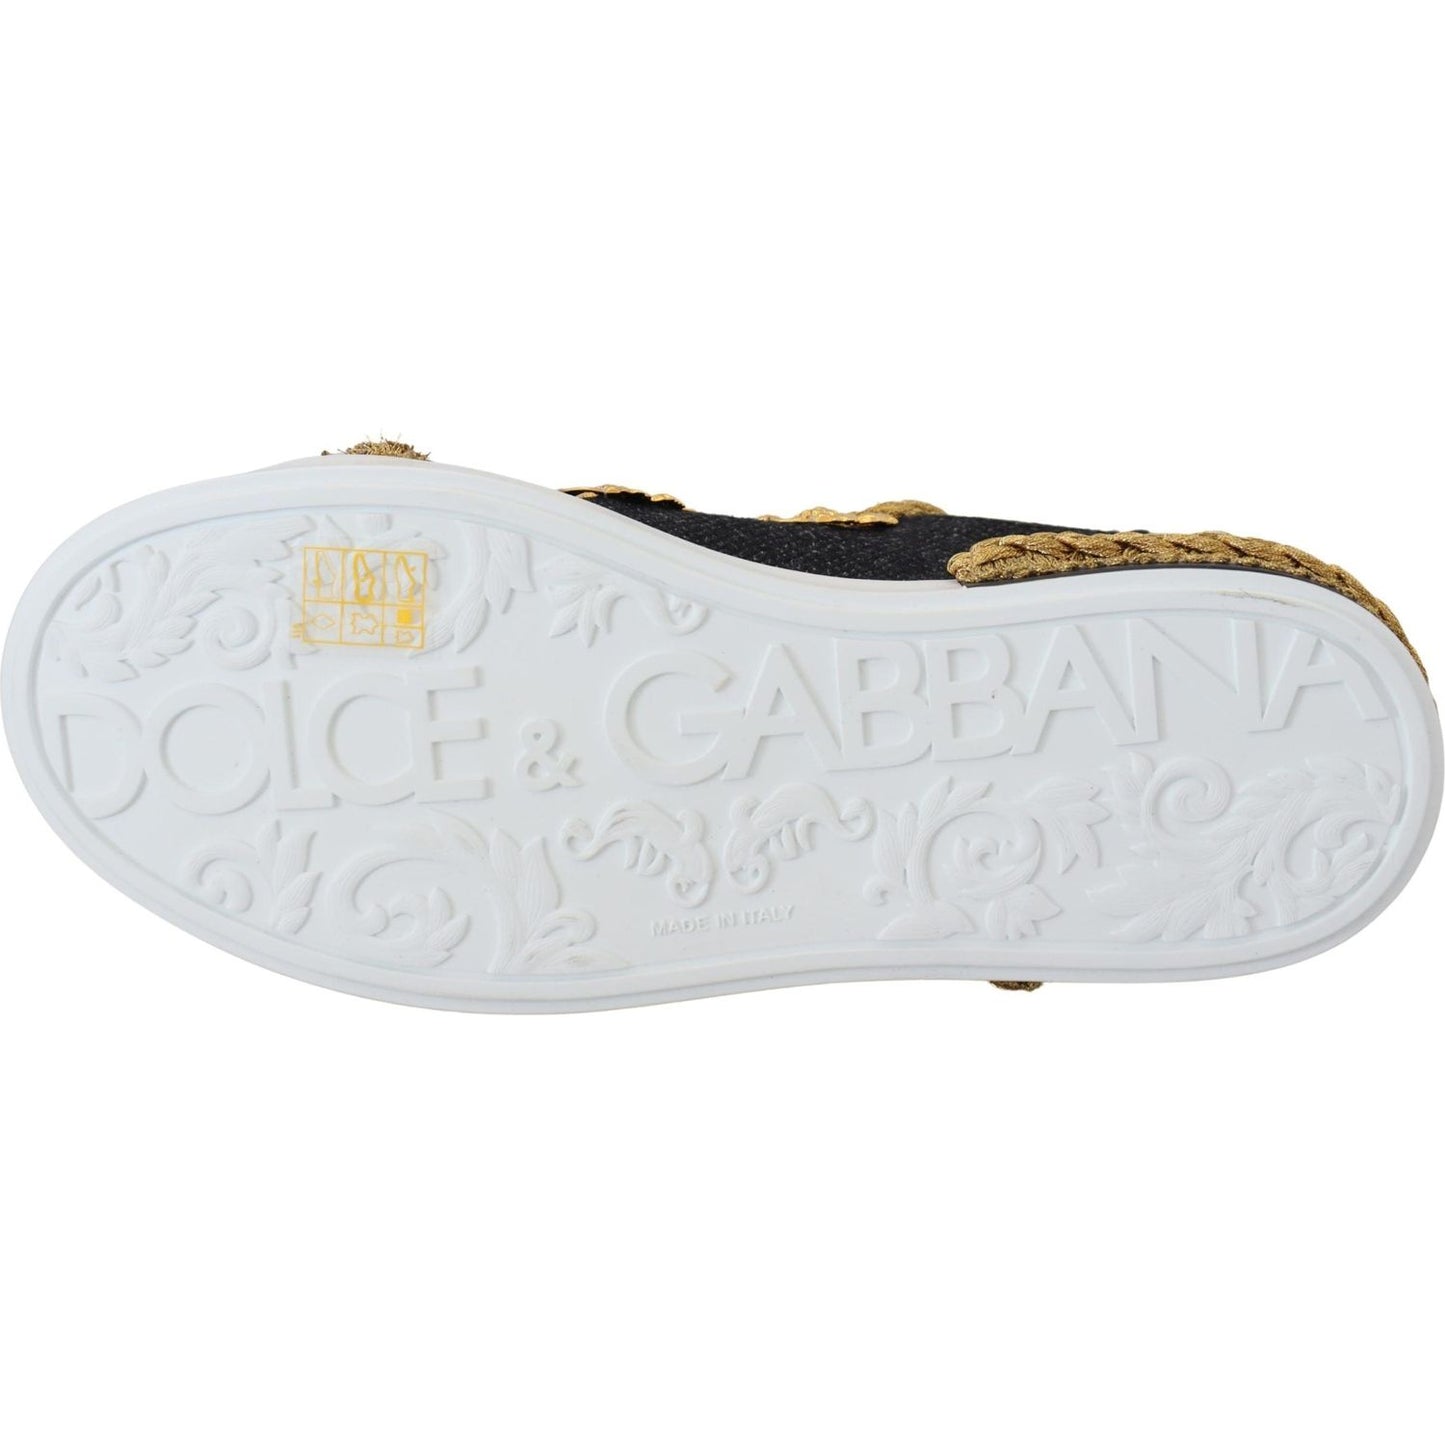 Dolce & GabbanaElegant Portofino Leather Sneakers in BlackMcRichard Designer Brands£639.00